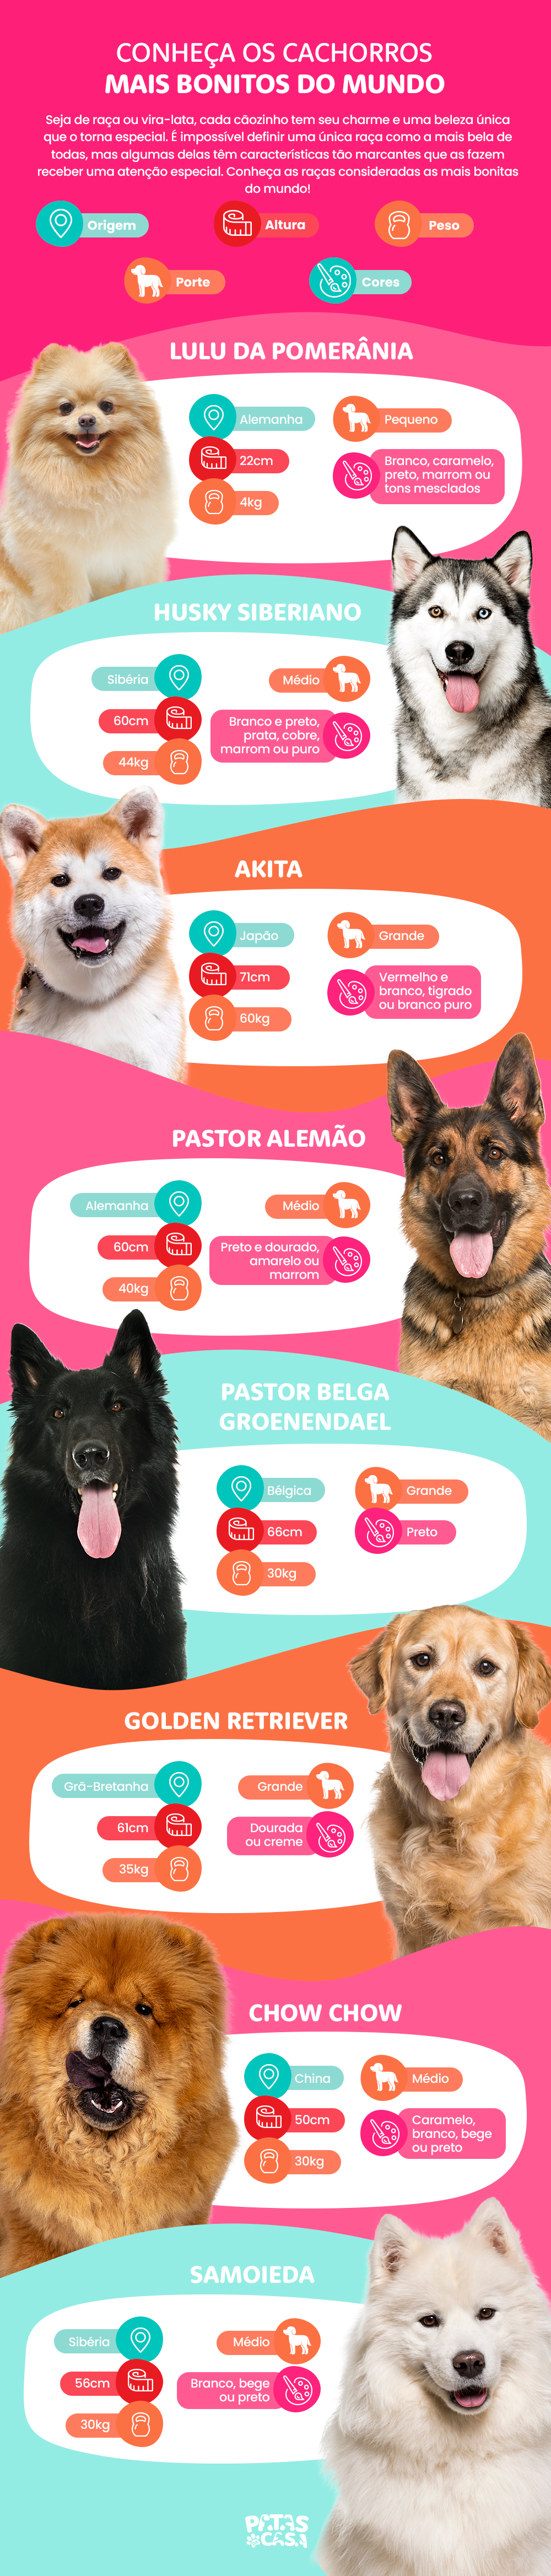  Mooiste hond ter wêreld: sien infografika met 8 rasse